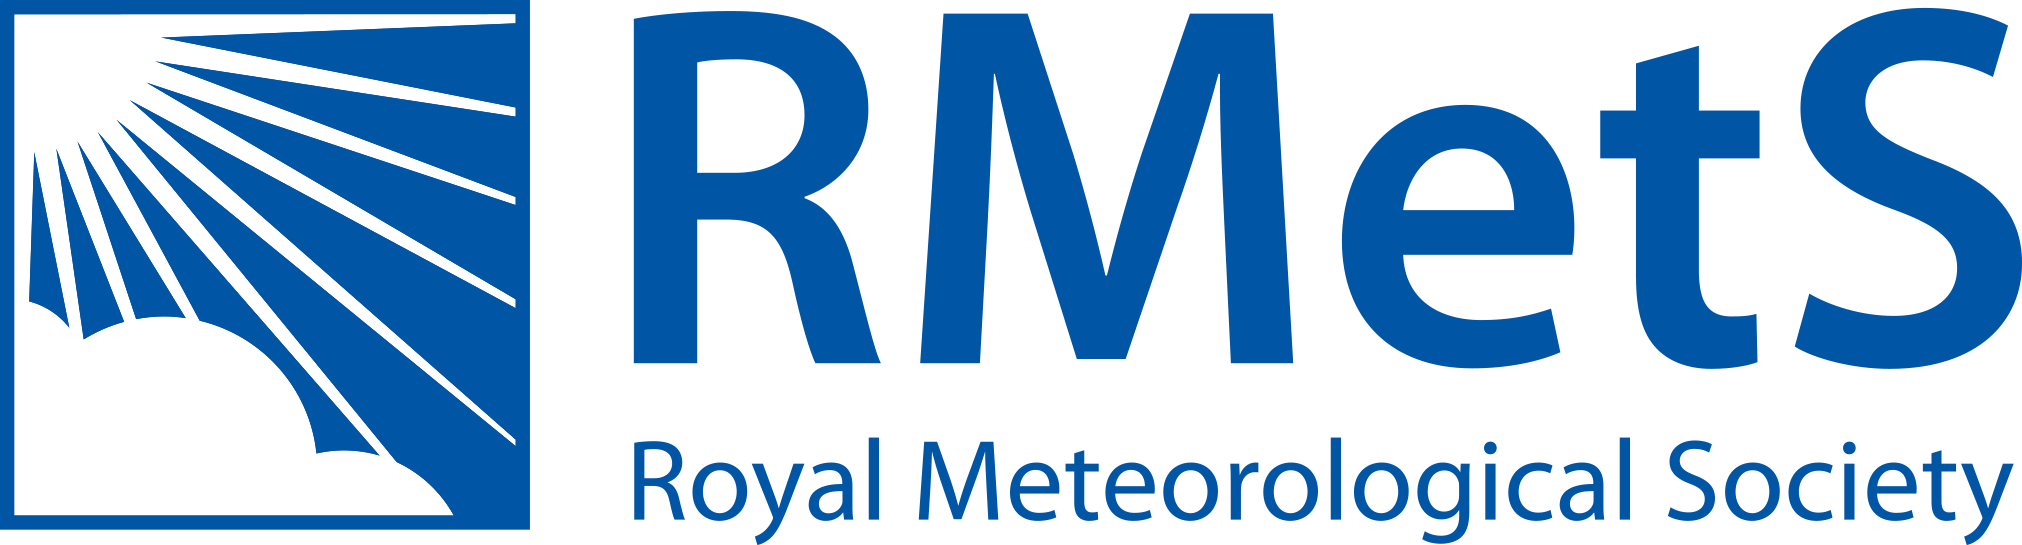 RMetS logo